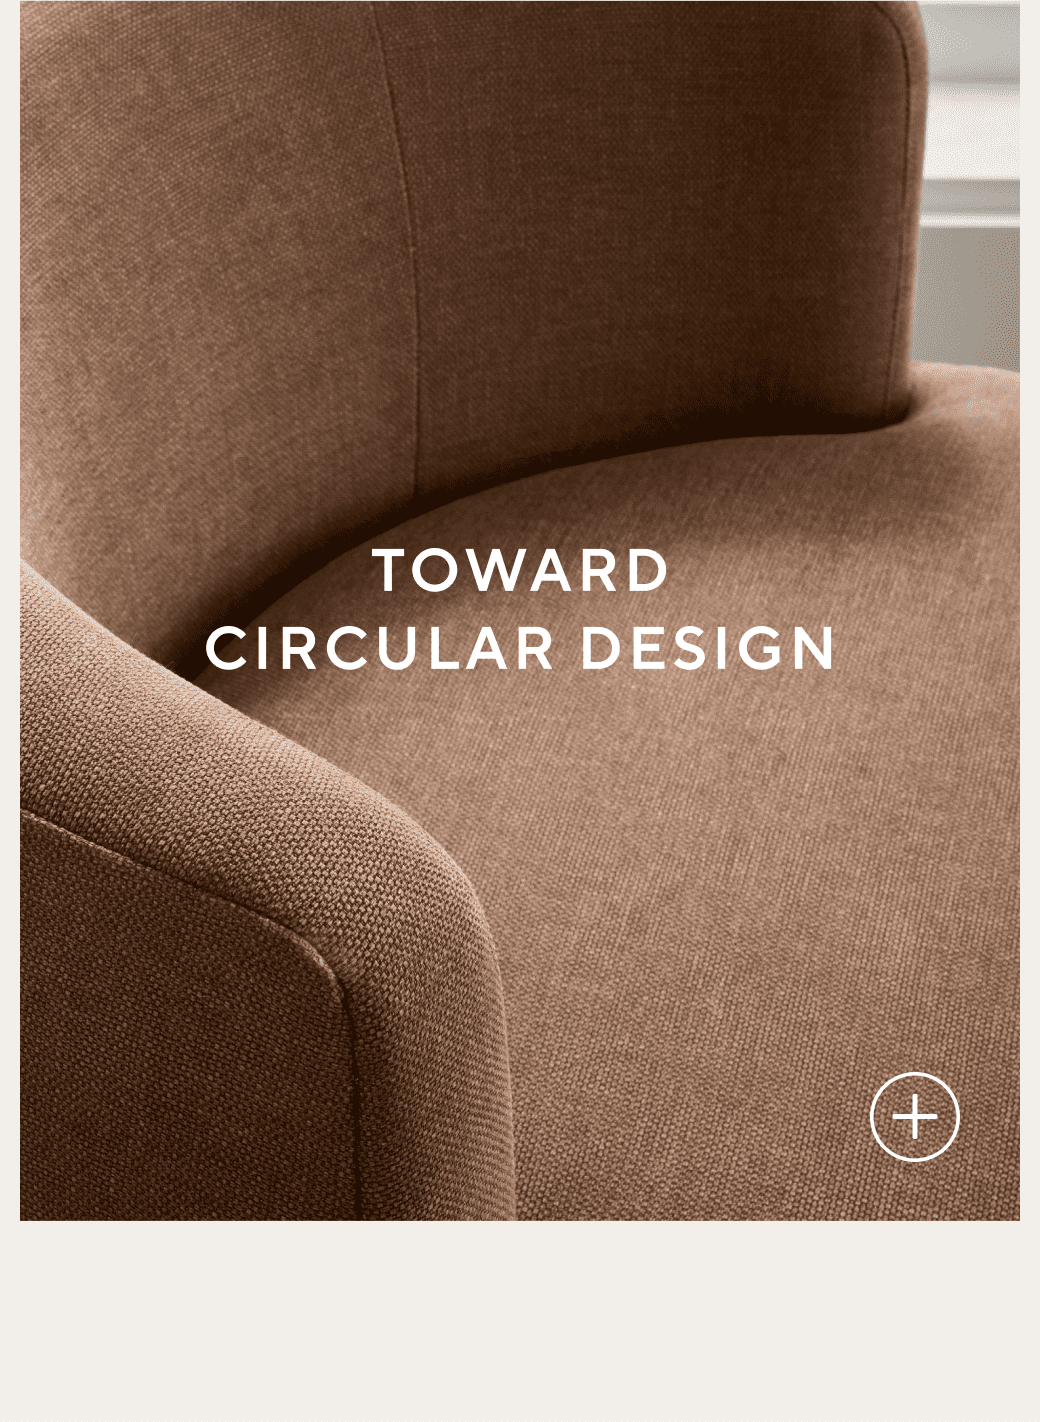 Toward Circular Design